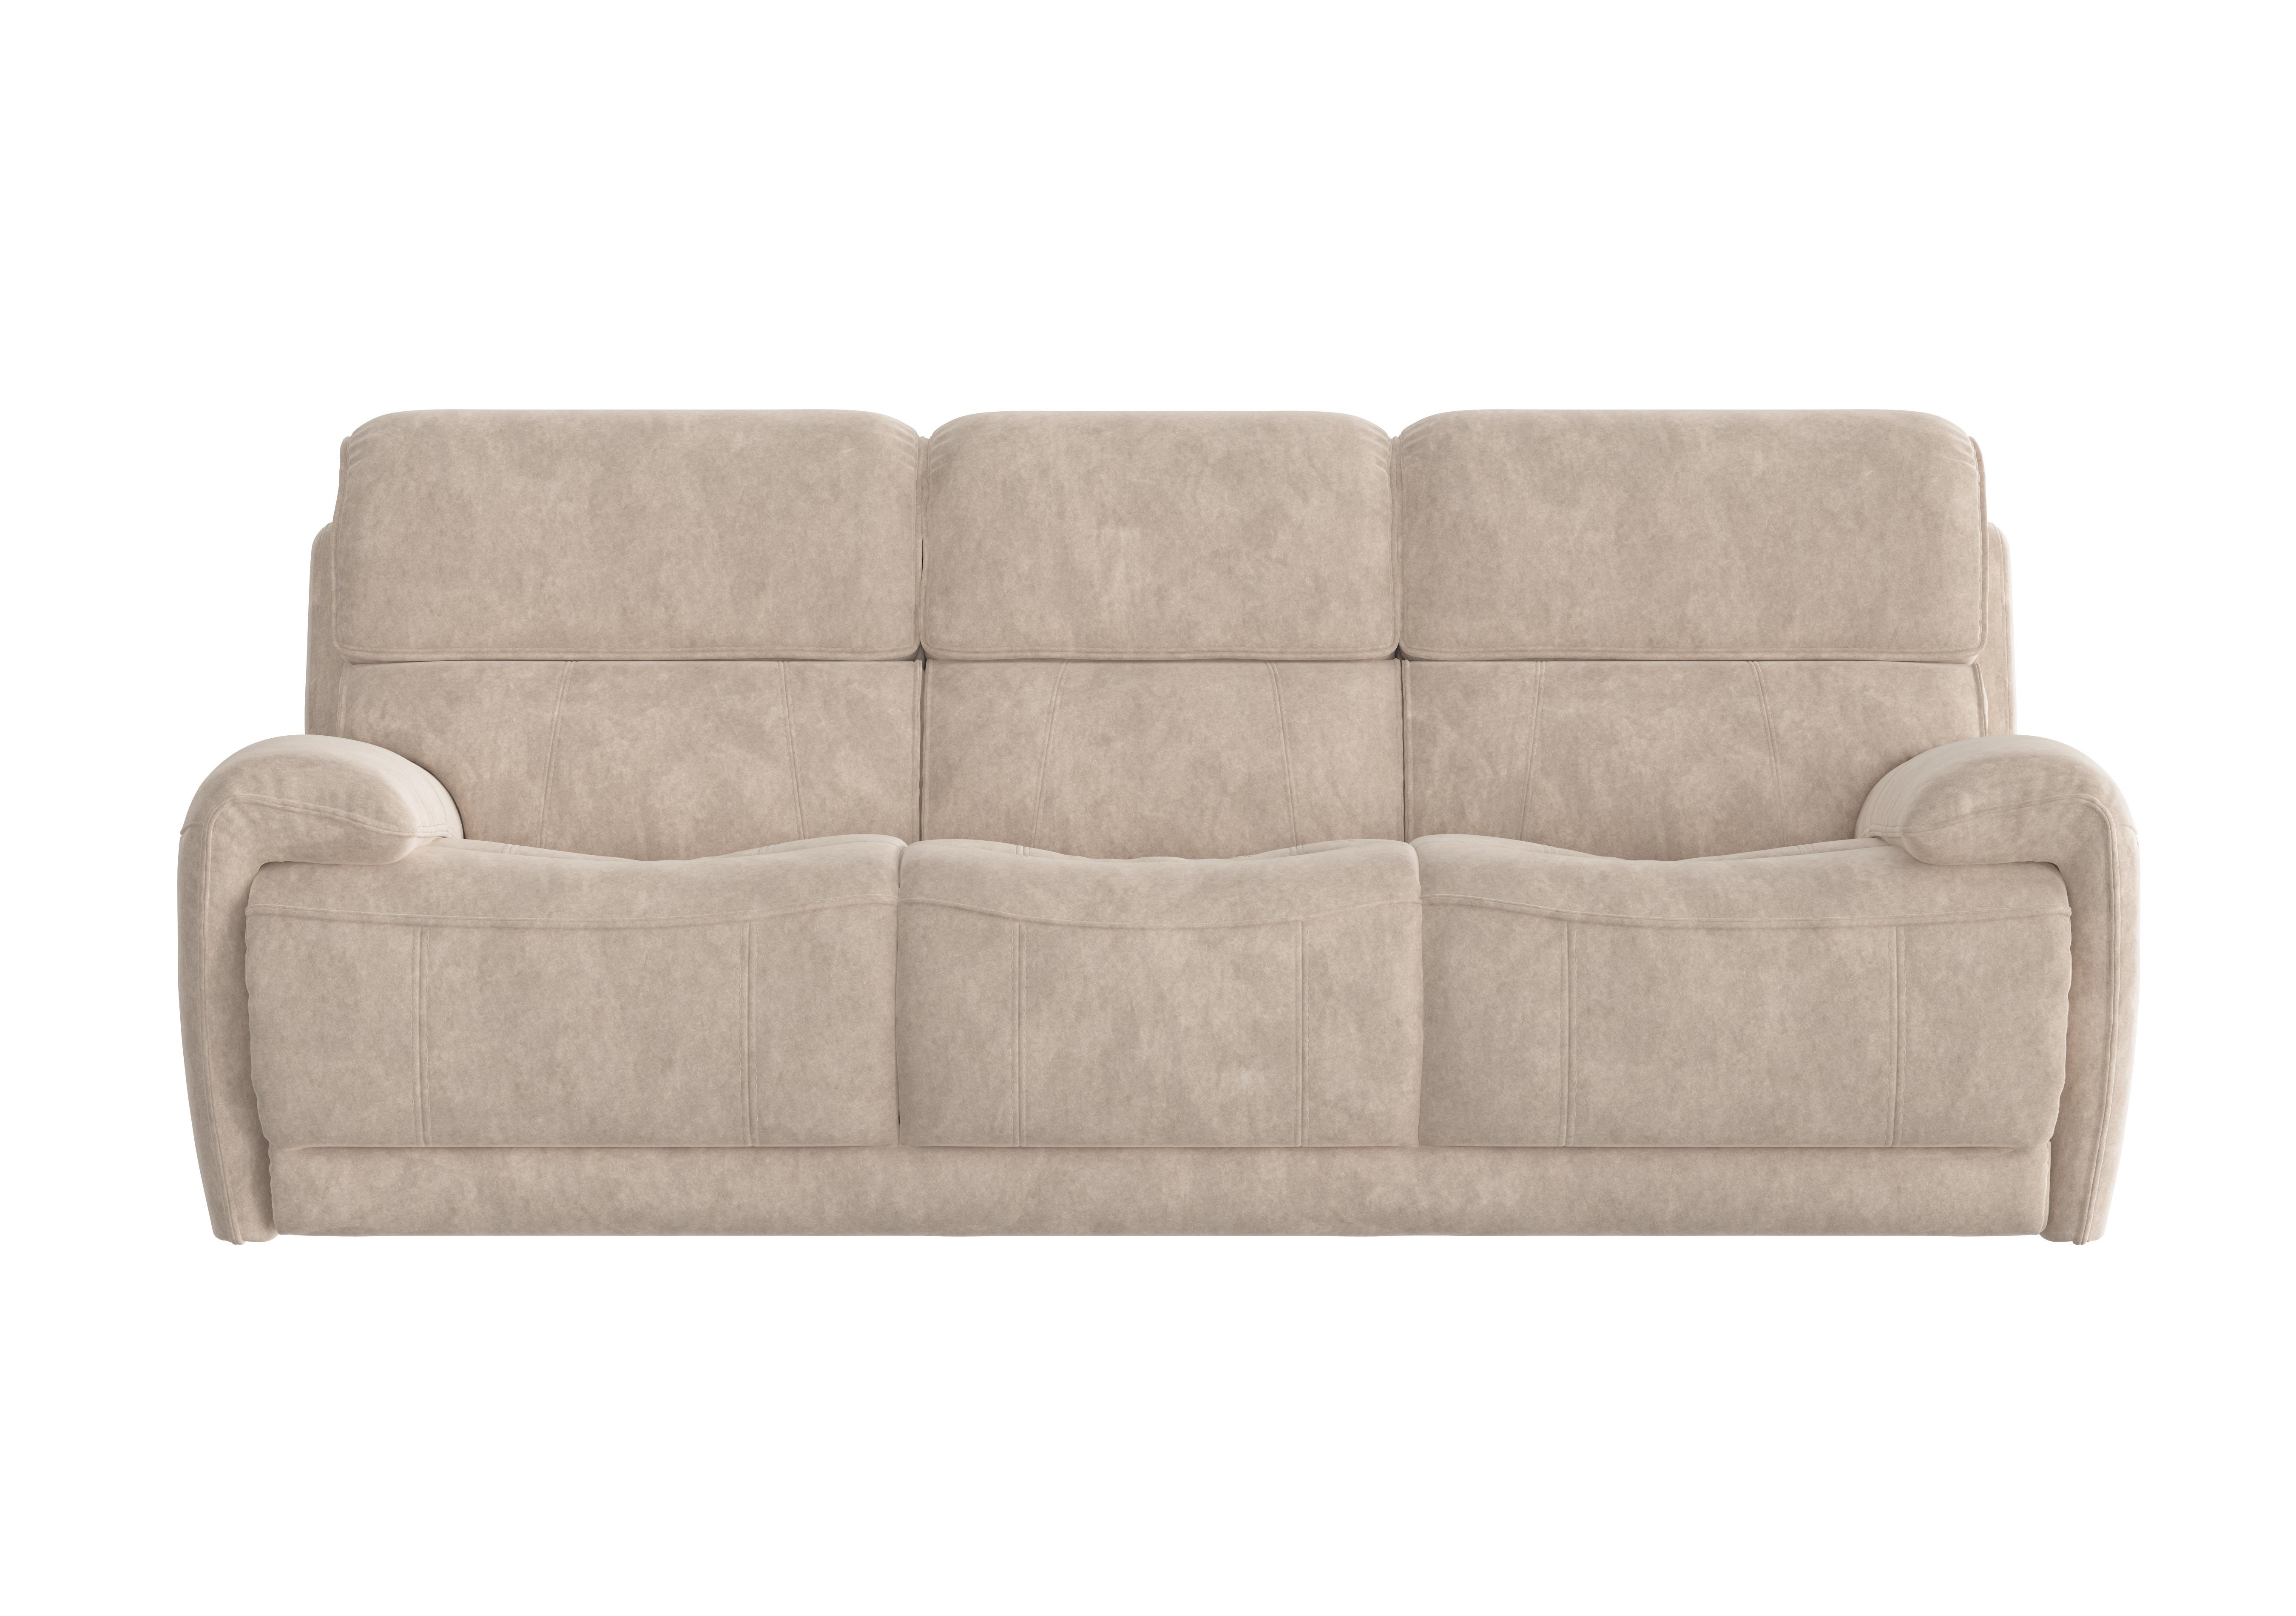 Link 3 Seater Fabric Sofa in Bfa-Bnn-R26 Fv2 Cream on Furniture Village